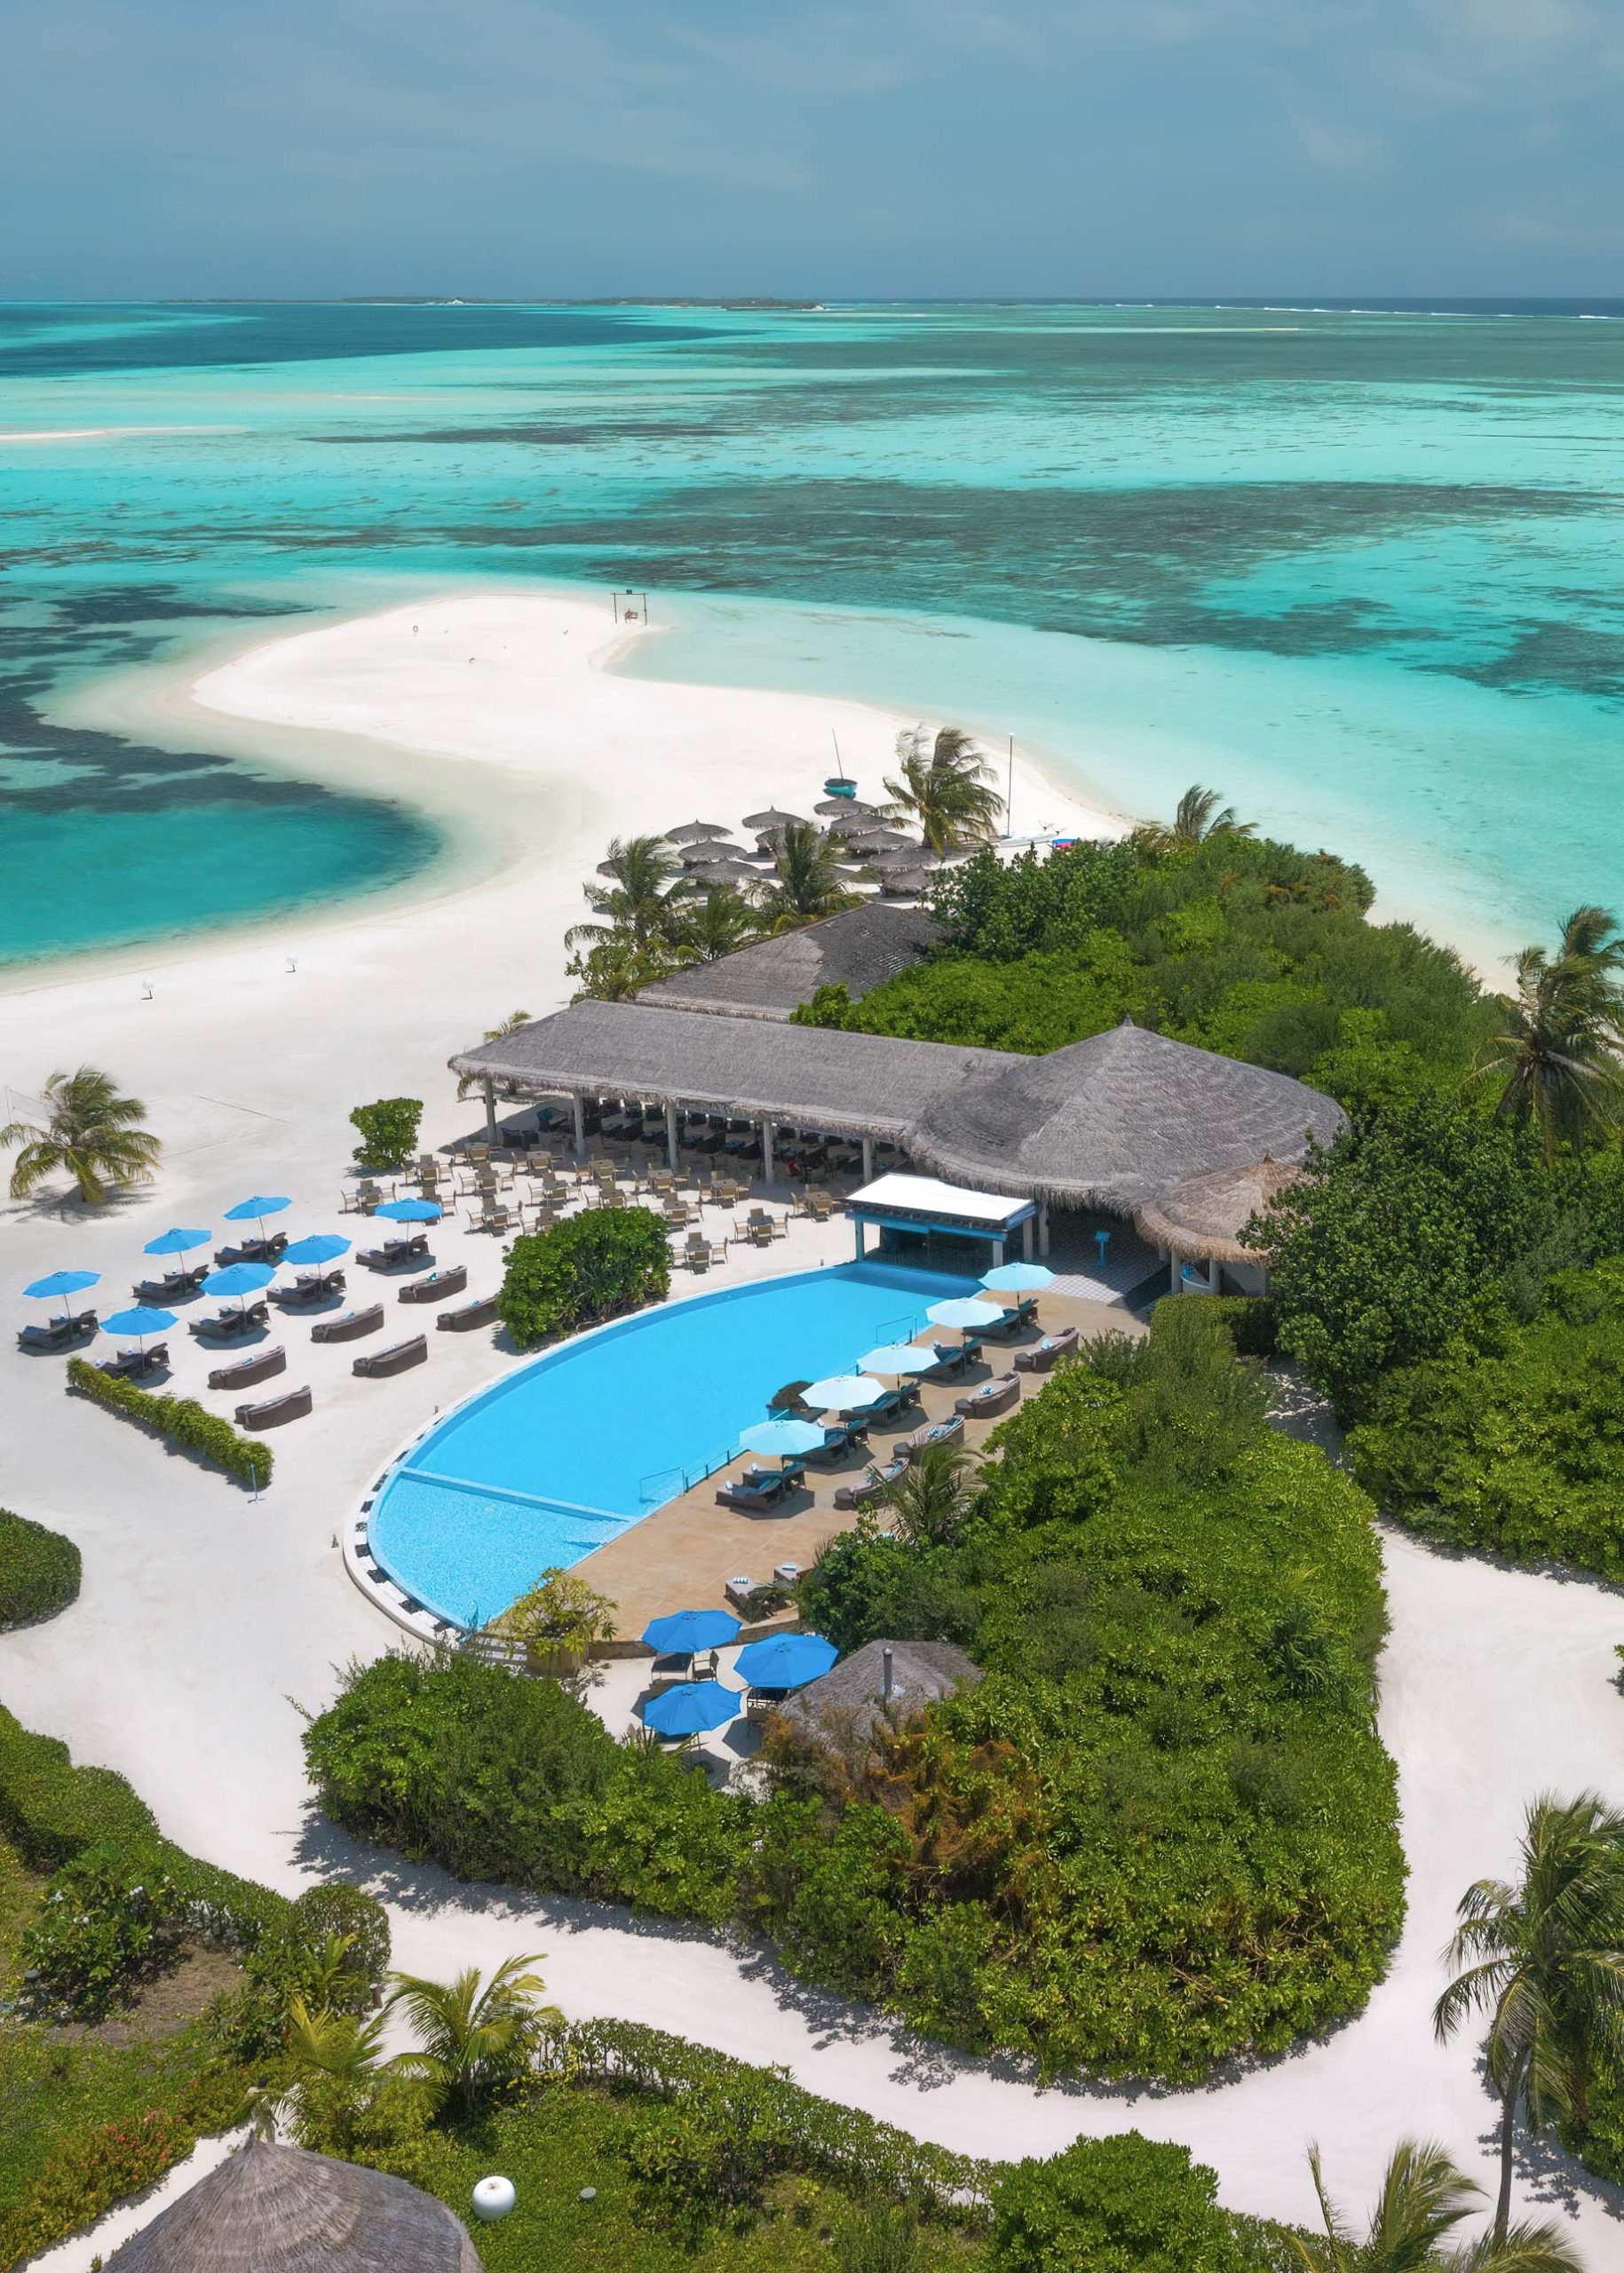 Cocoon Maldives Resort - Ookolhufinolhu, Lhaviyani Atoll, Maldives - Resort Pool Aerial View